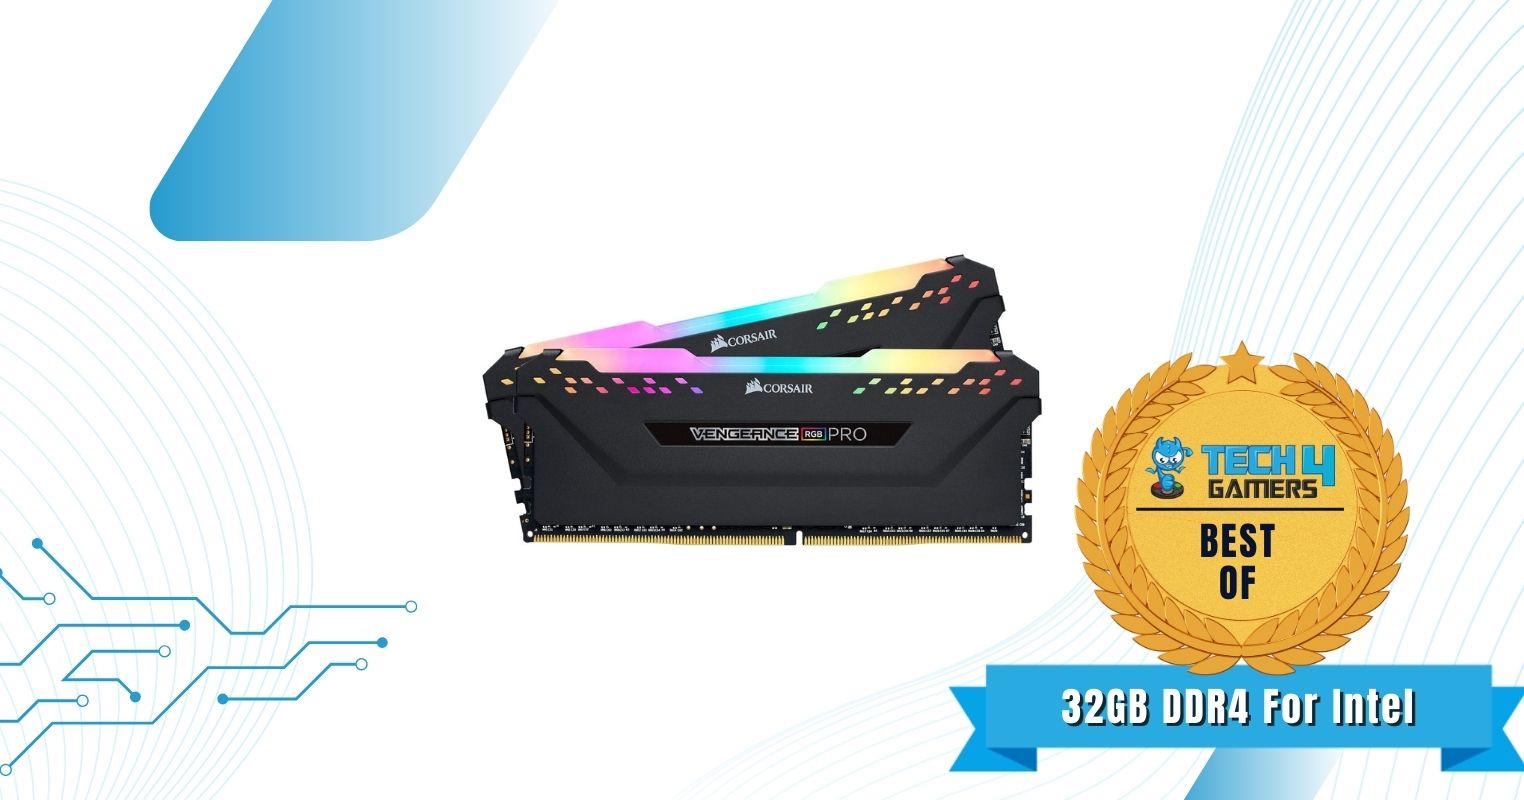 Corsair Vengeance RGB Pro DDR4 - Best 32GB DDR4 RAM For Intel Platform